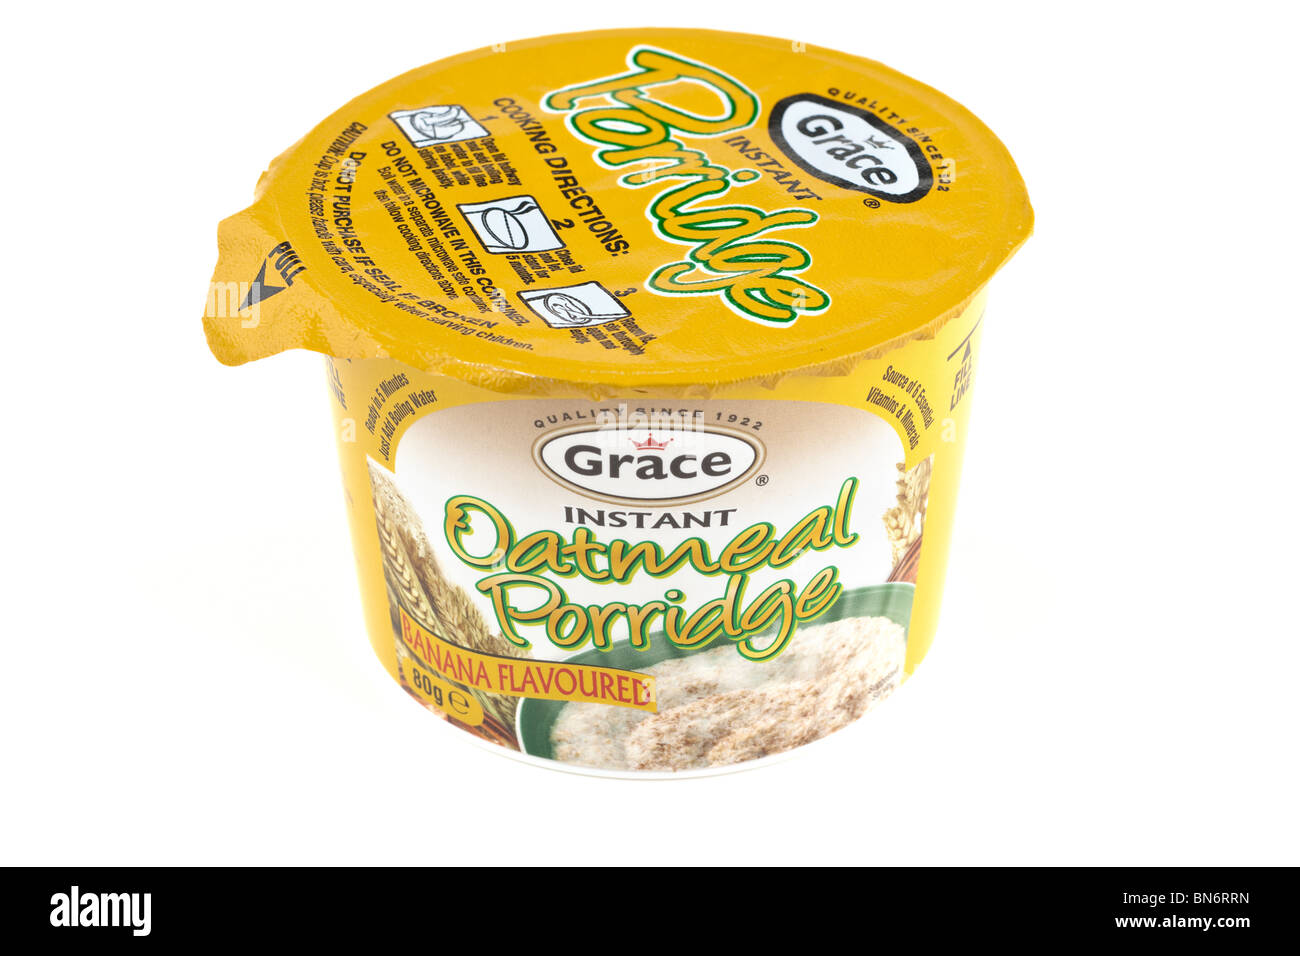 Carton of Grace instant oatmeal porridge Stock Photo